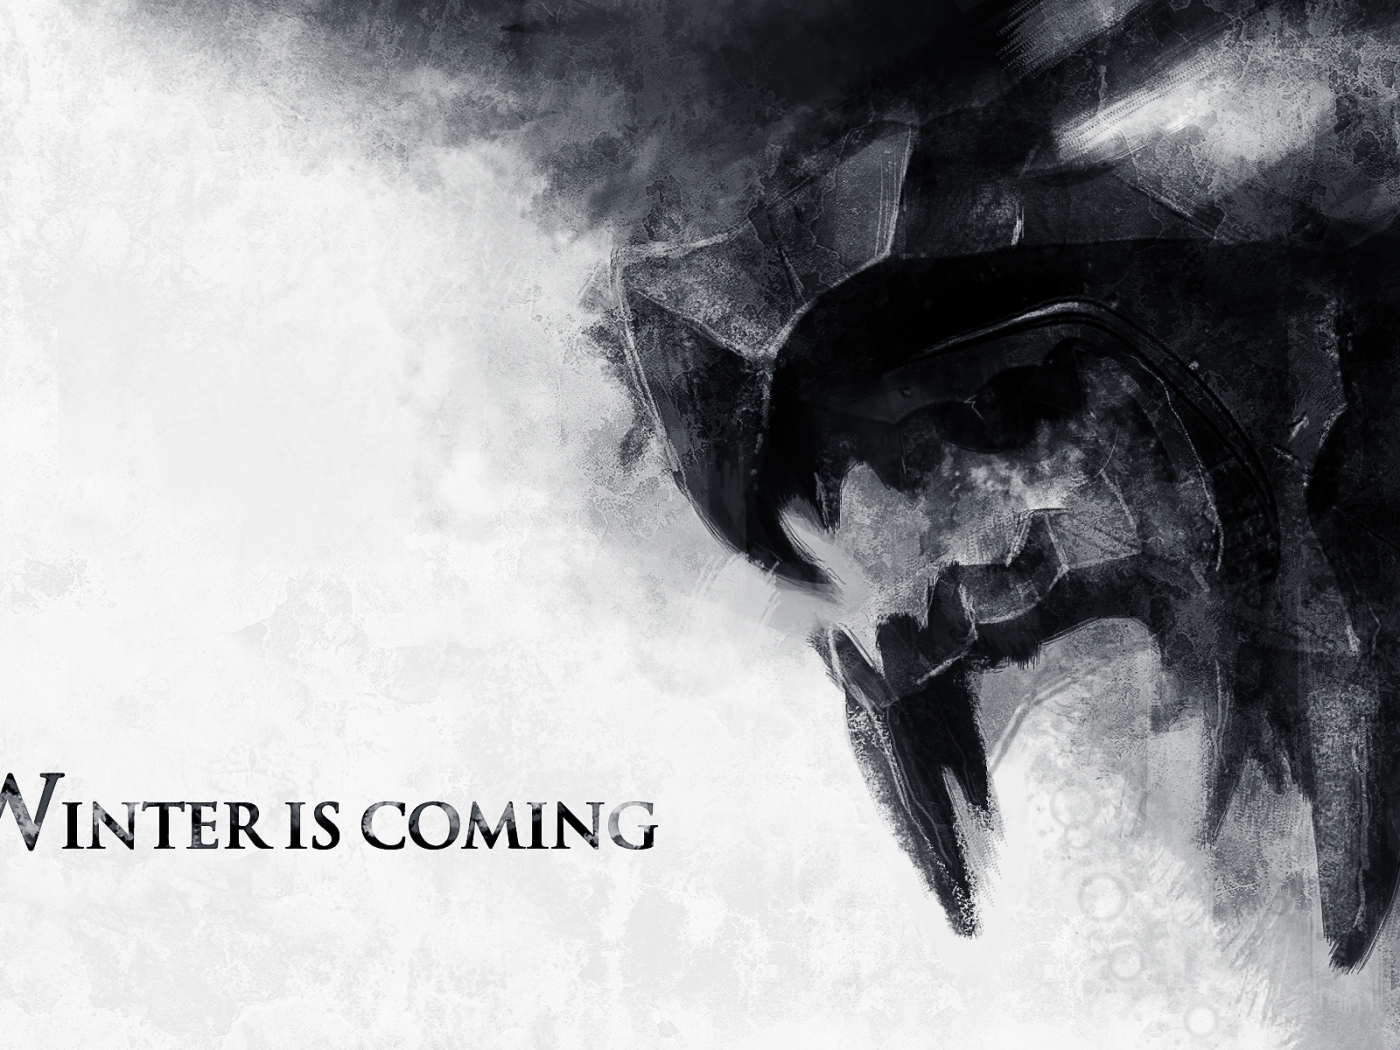 зима близко, старки, stark, game of thrones, wolf, winter is coming